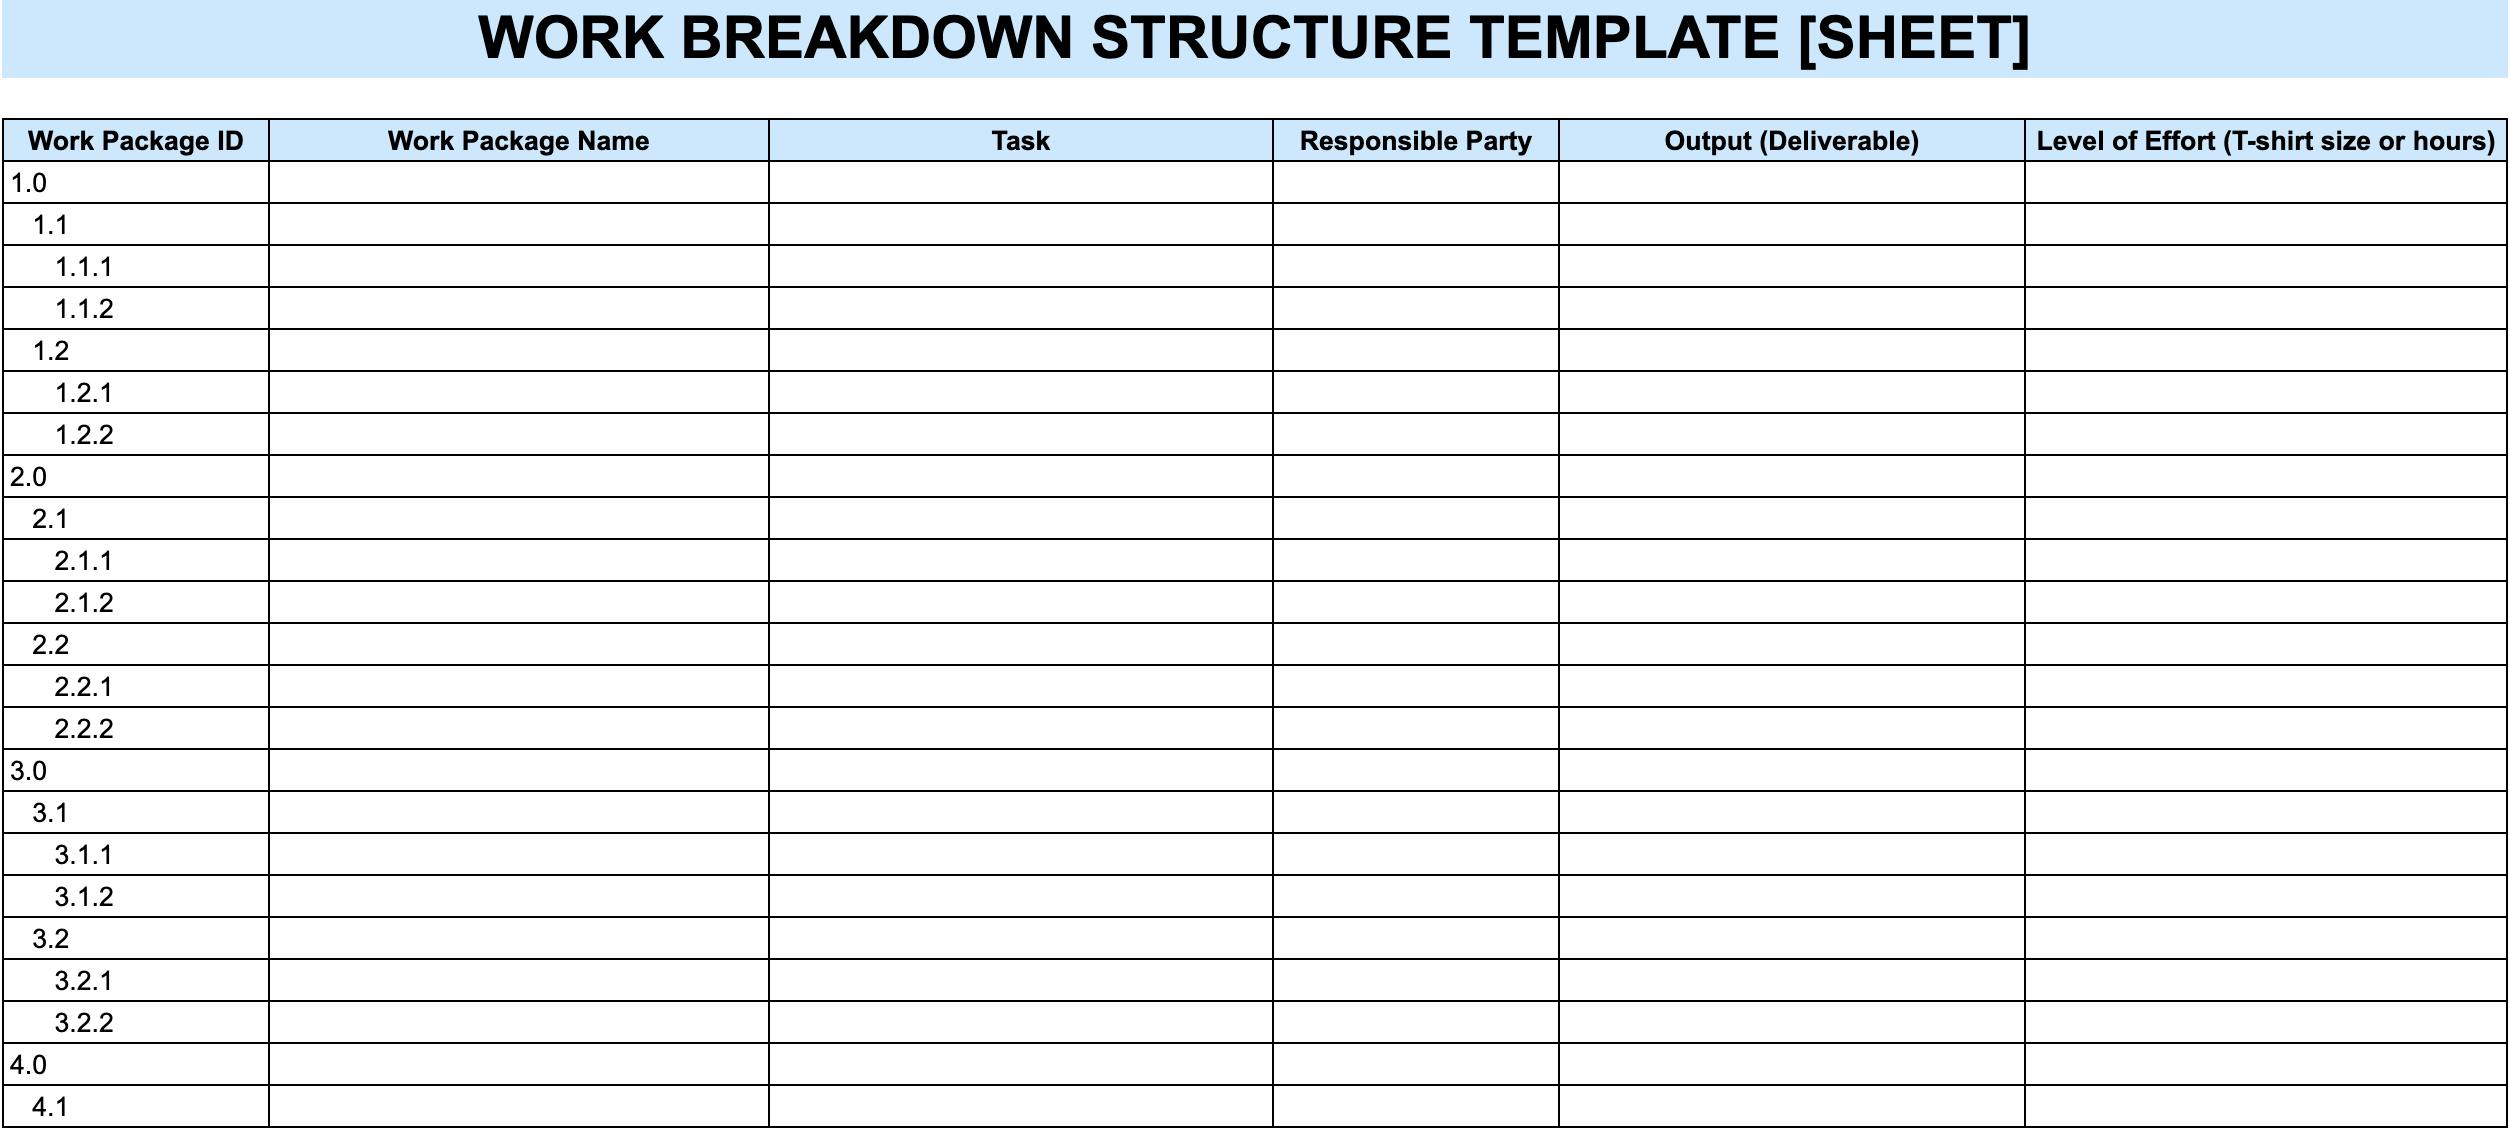 a screenshot of a work breakdown structure template in spreadsheet format